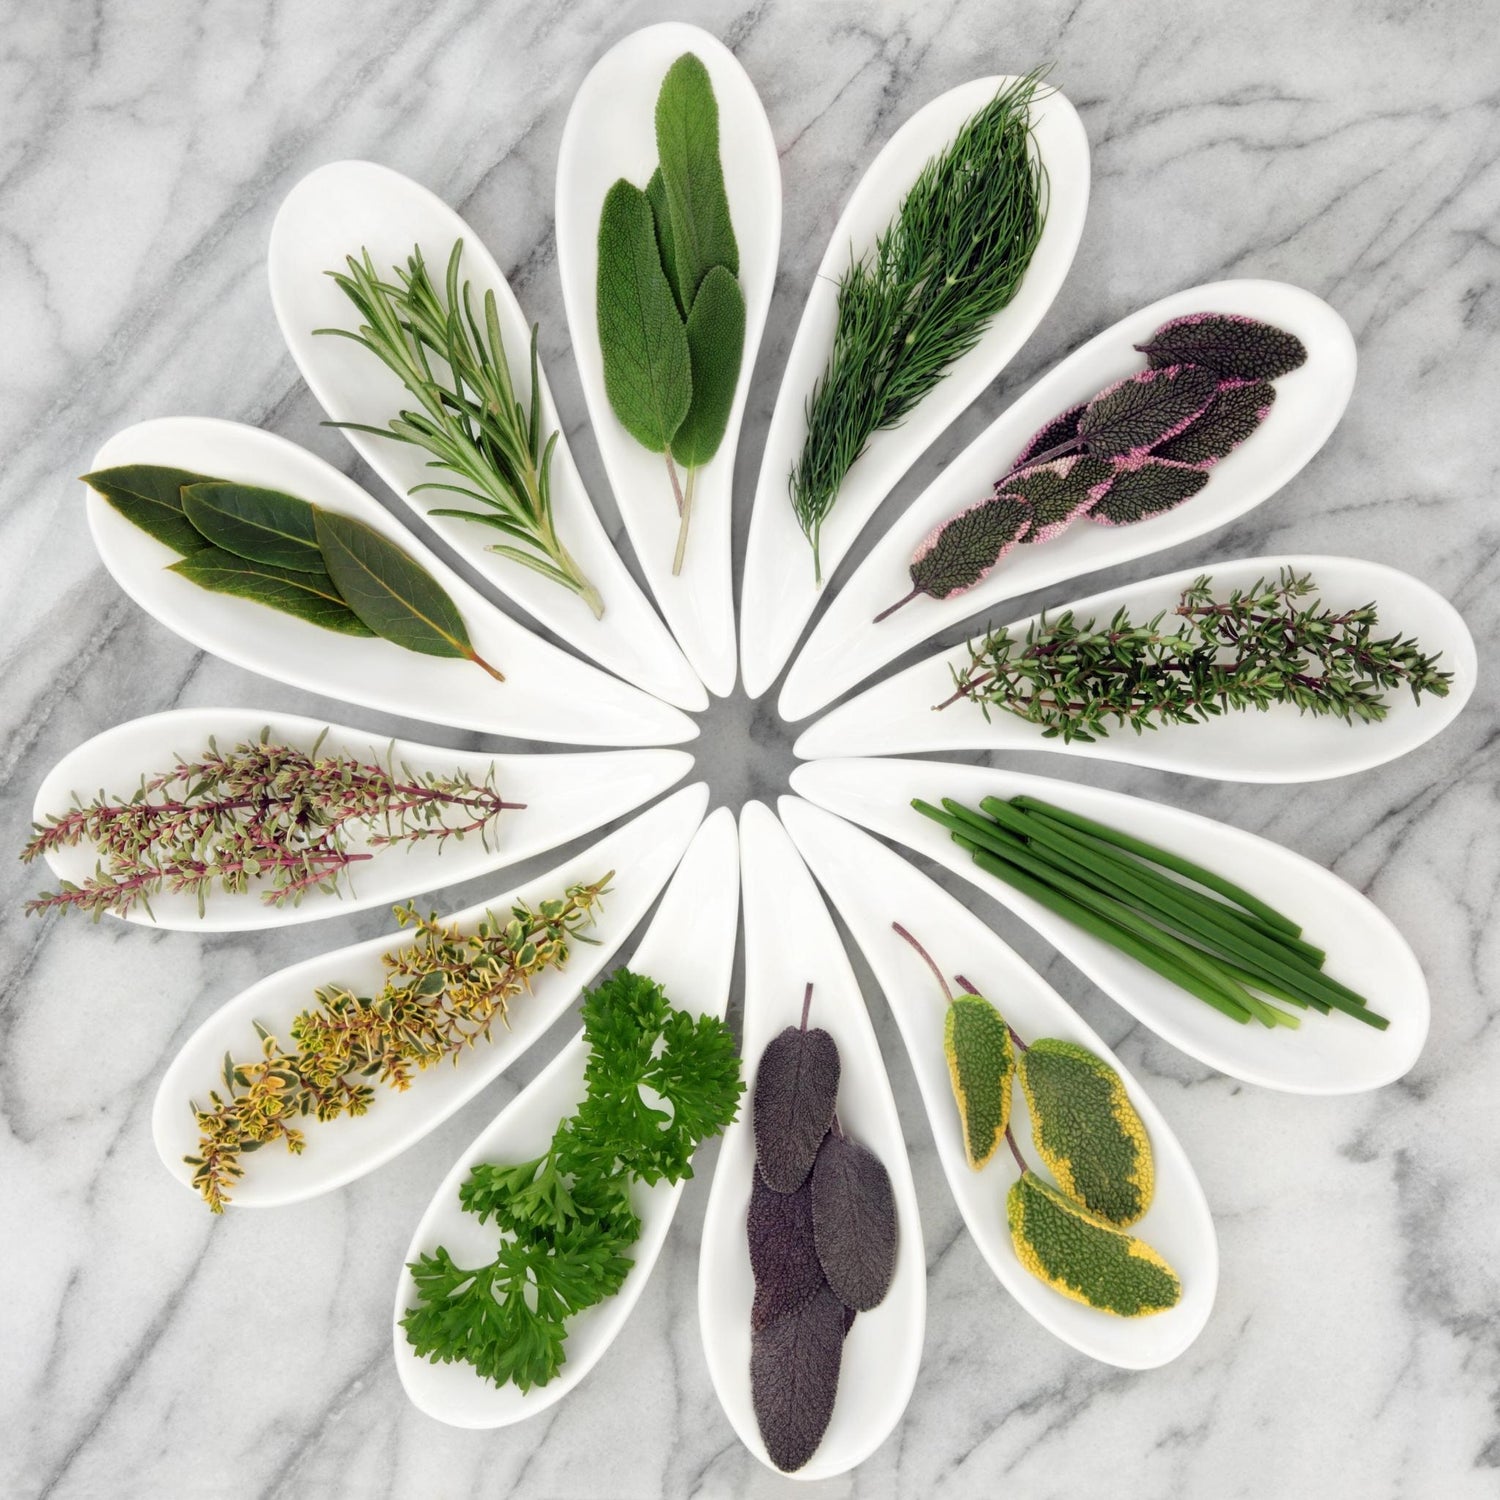 Cultivate herbs right at home! Grow thyme, rosemary, tarragon, leek, chives, garlic chives, basil, mint, lemon balm, stevia, perilla / shiso, sage, oregano, sweet marjoram, summer savoury, parsley, mitsuba, lovage, chervil, fennel, dill, hyssop, papalo, lavender, borage, nasturtium, marigold, calendula, cosmos flower, echinacea, violas, etc to feed your inner herbivore.